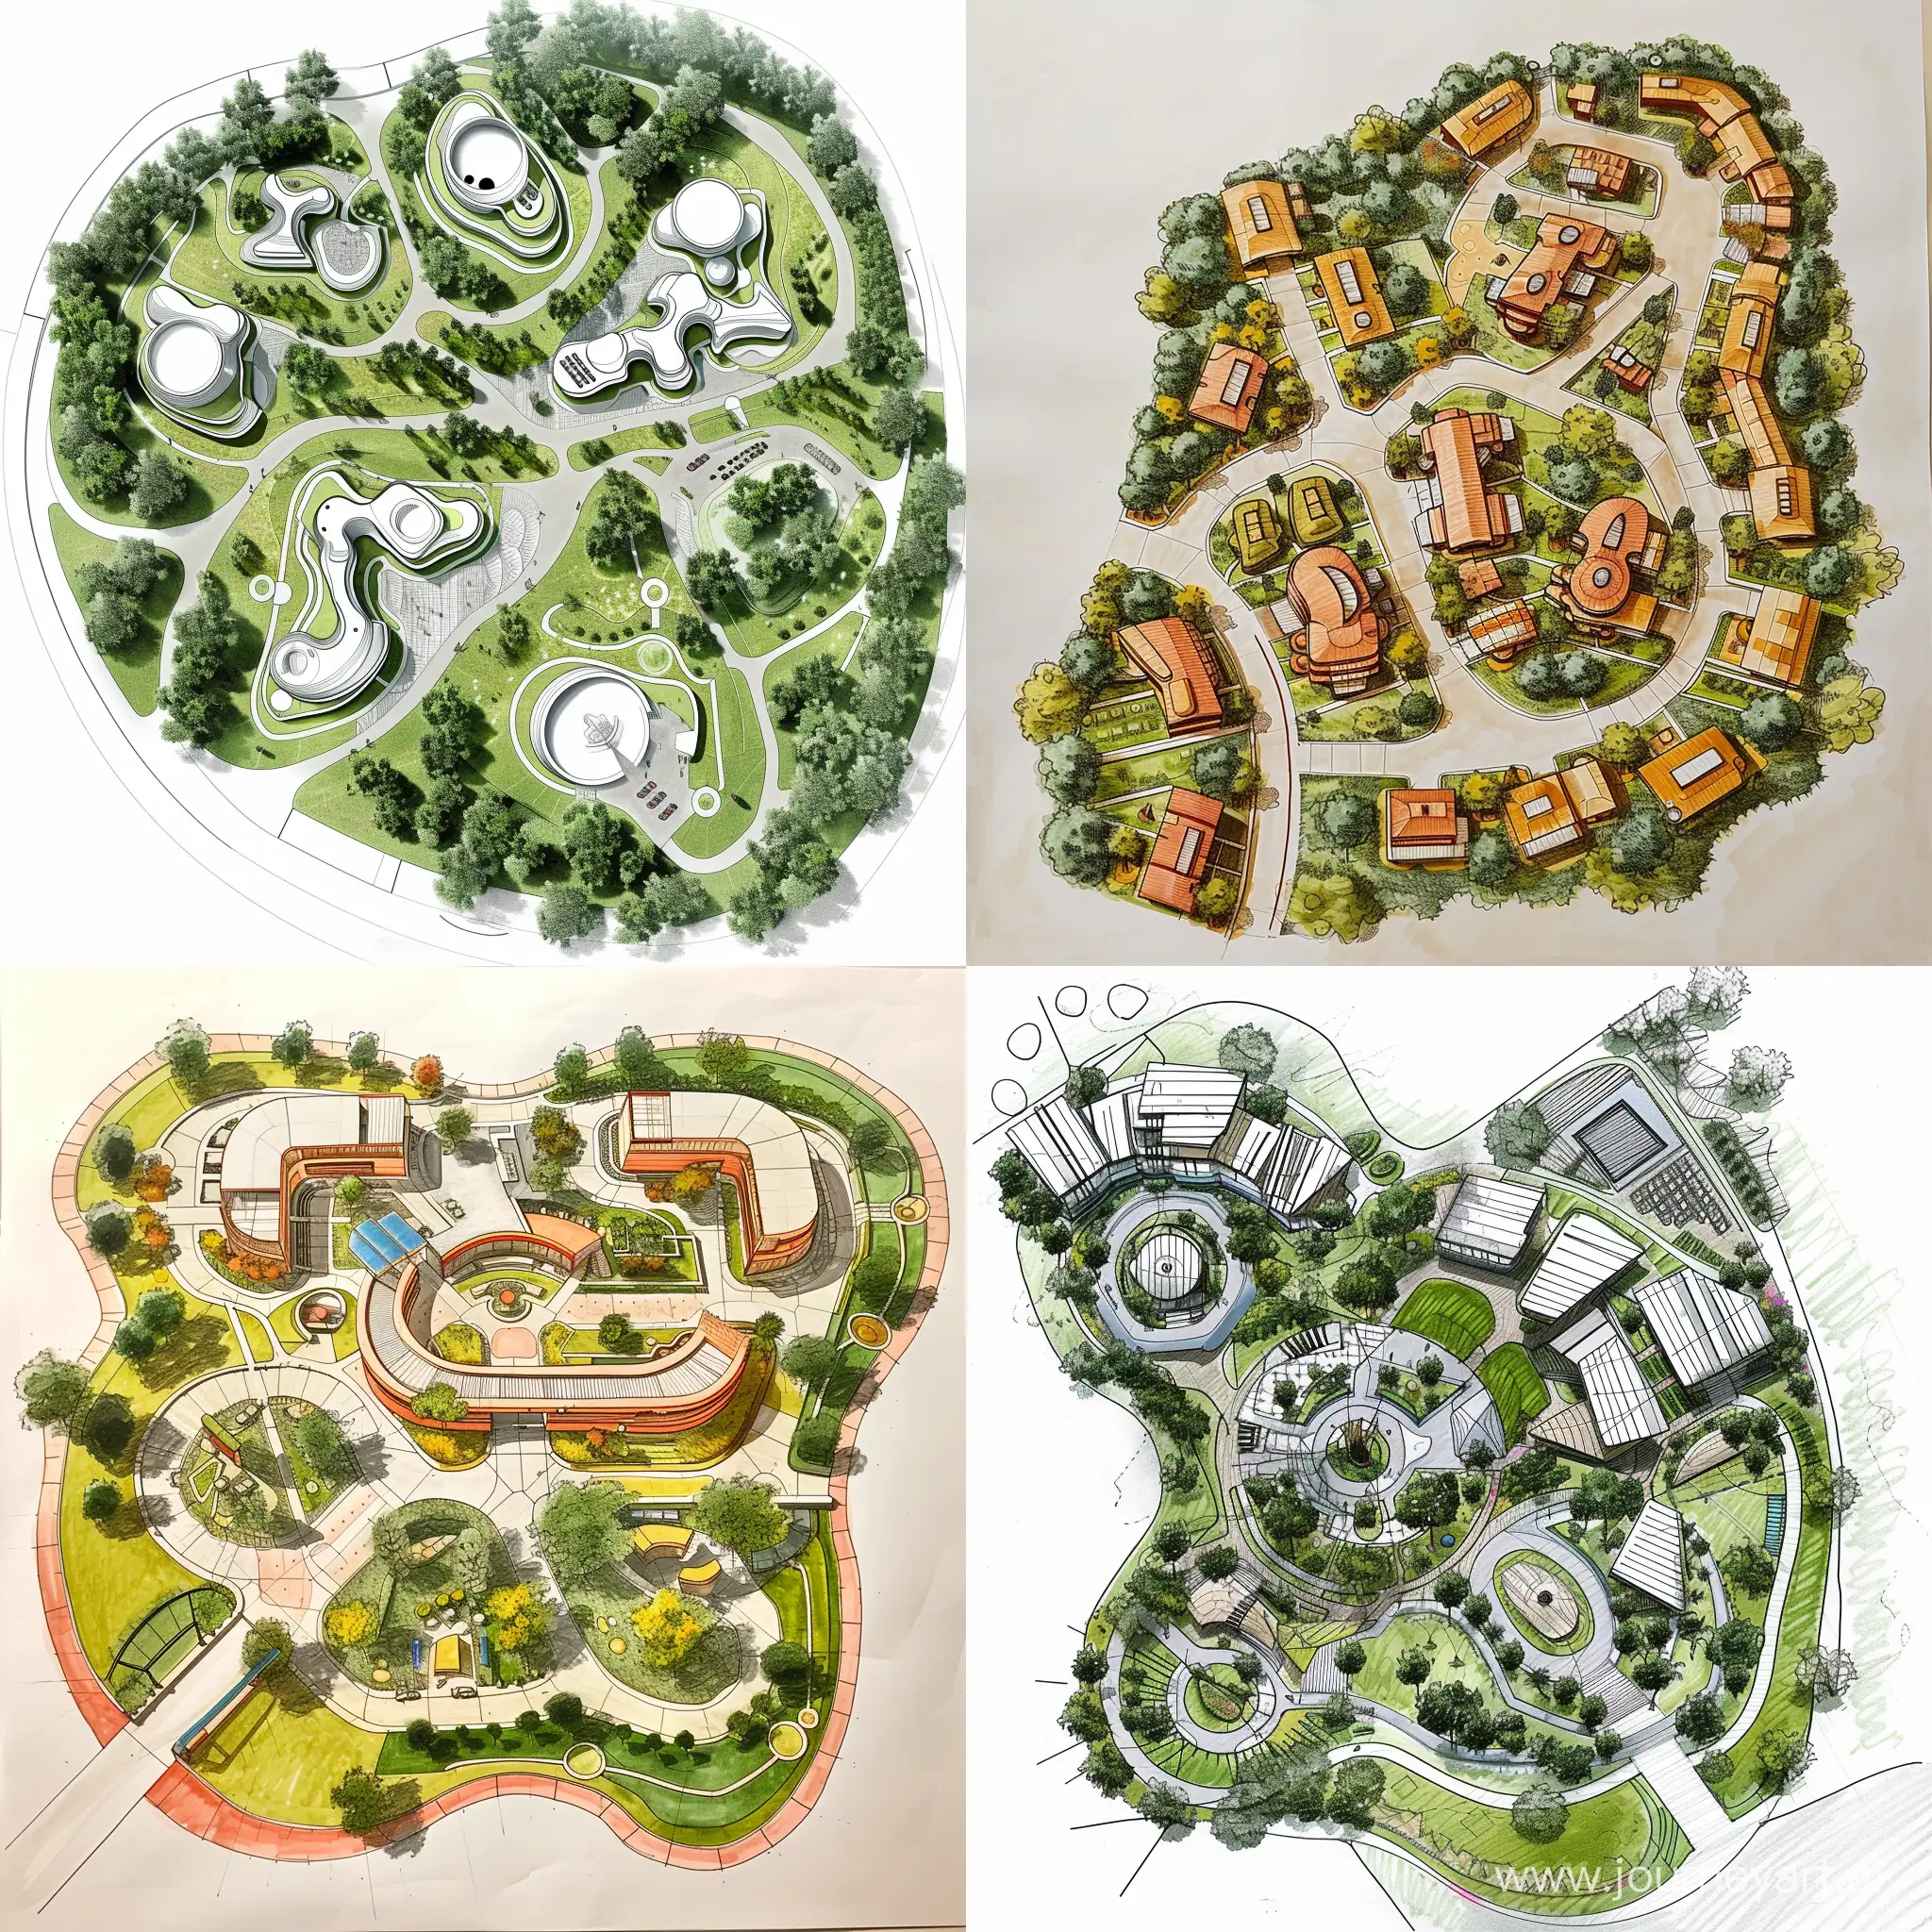 Futuristic-Village-Planning-Aerial-Blueprint-of-Innovation-and-Harmony